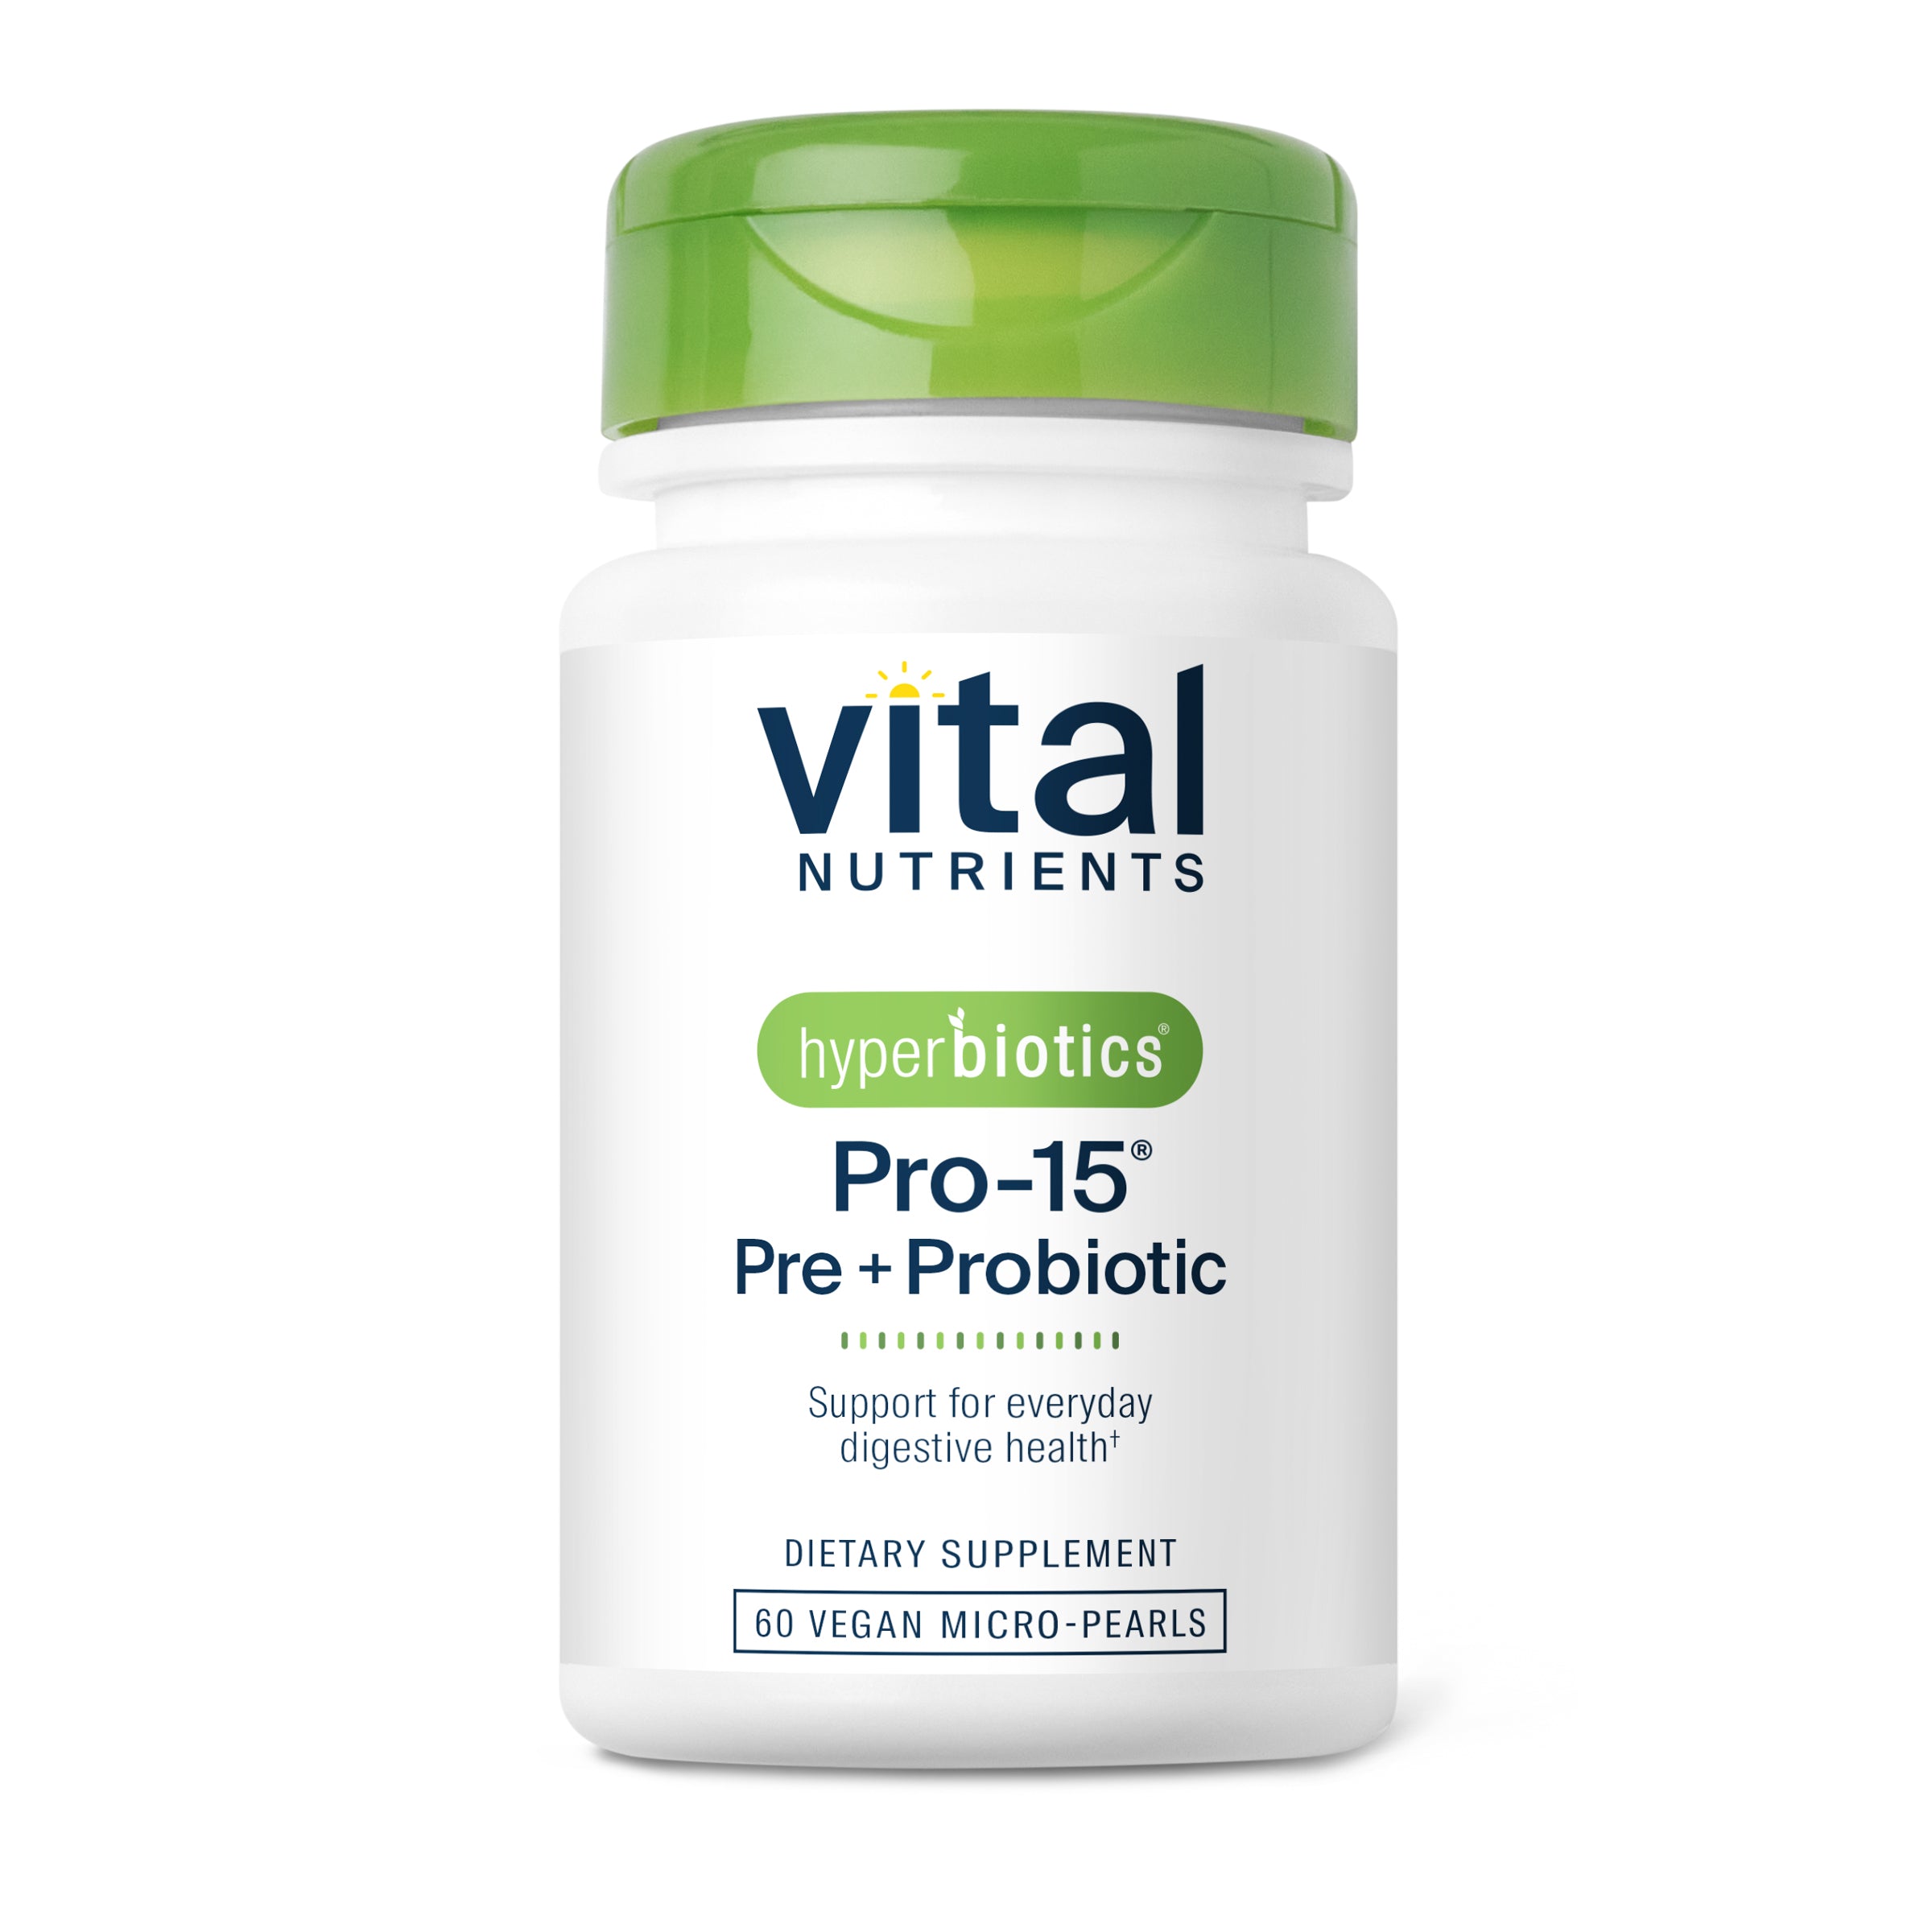 Hyperbiotics Pro-15 Pre+Probiotic 60 vegan micro-pearls.